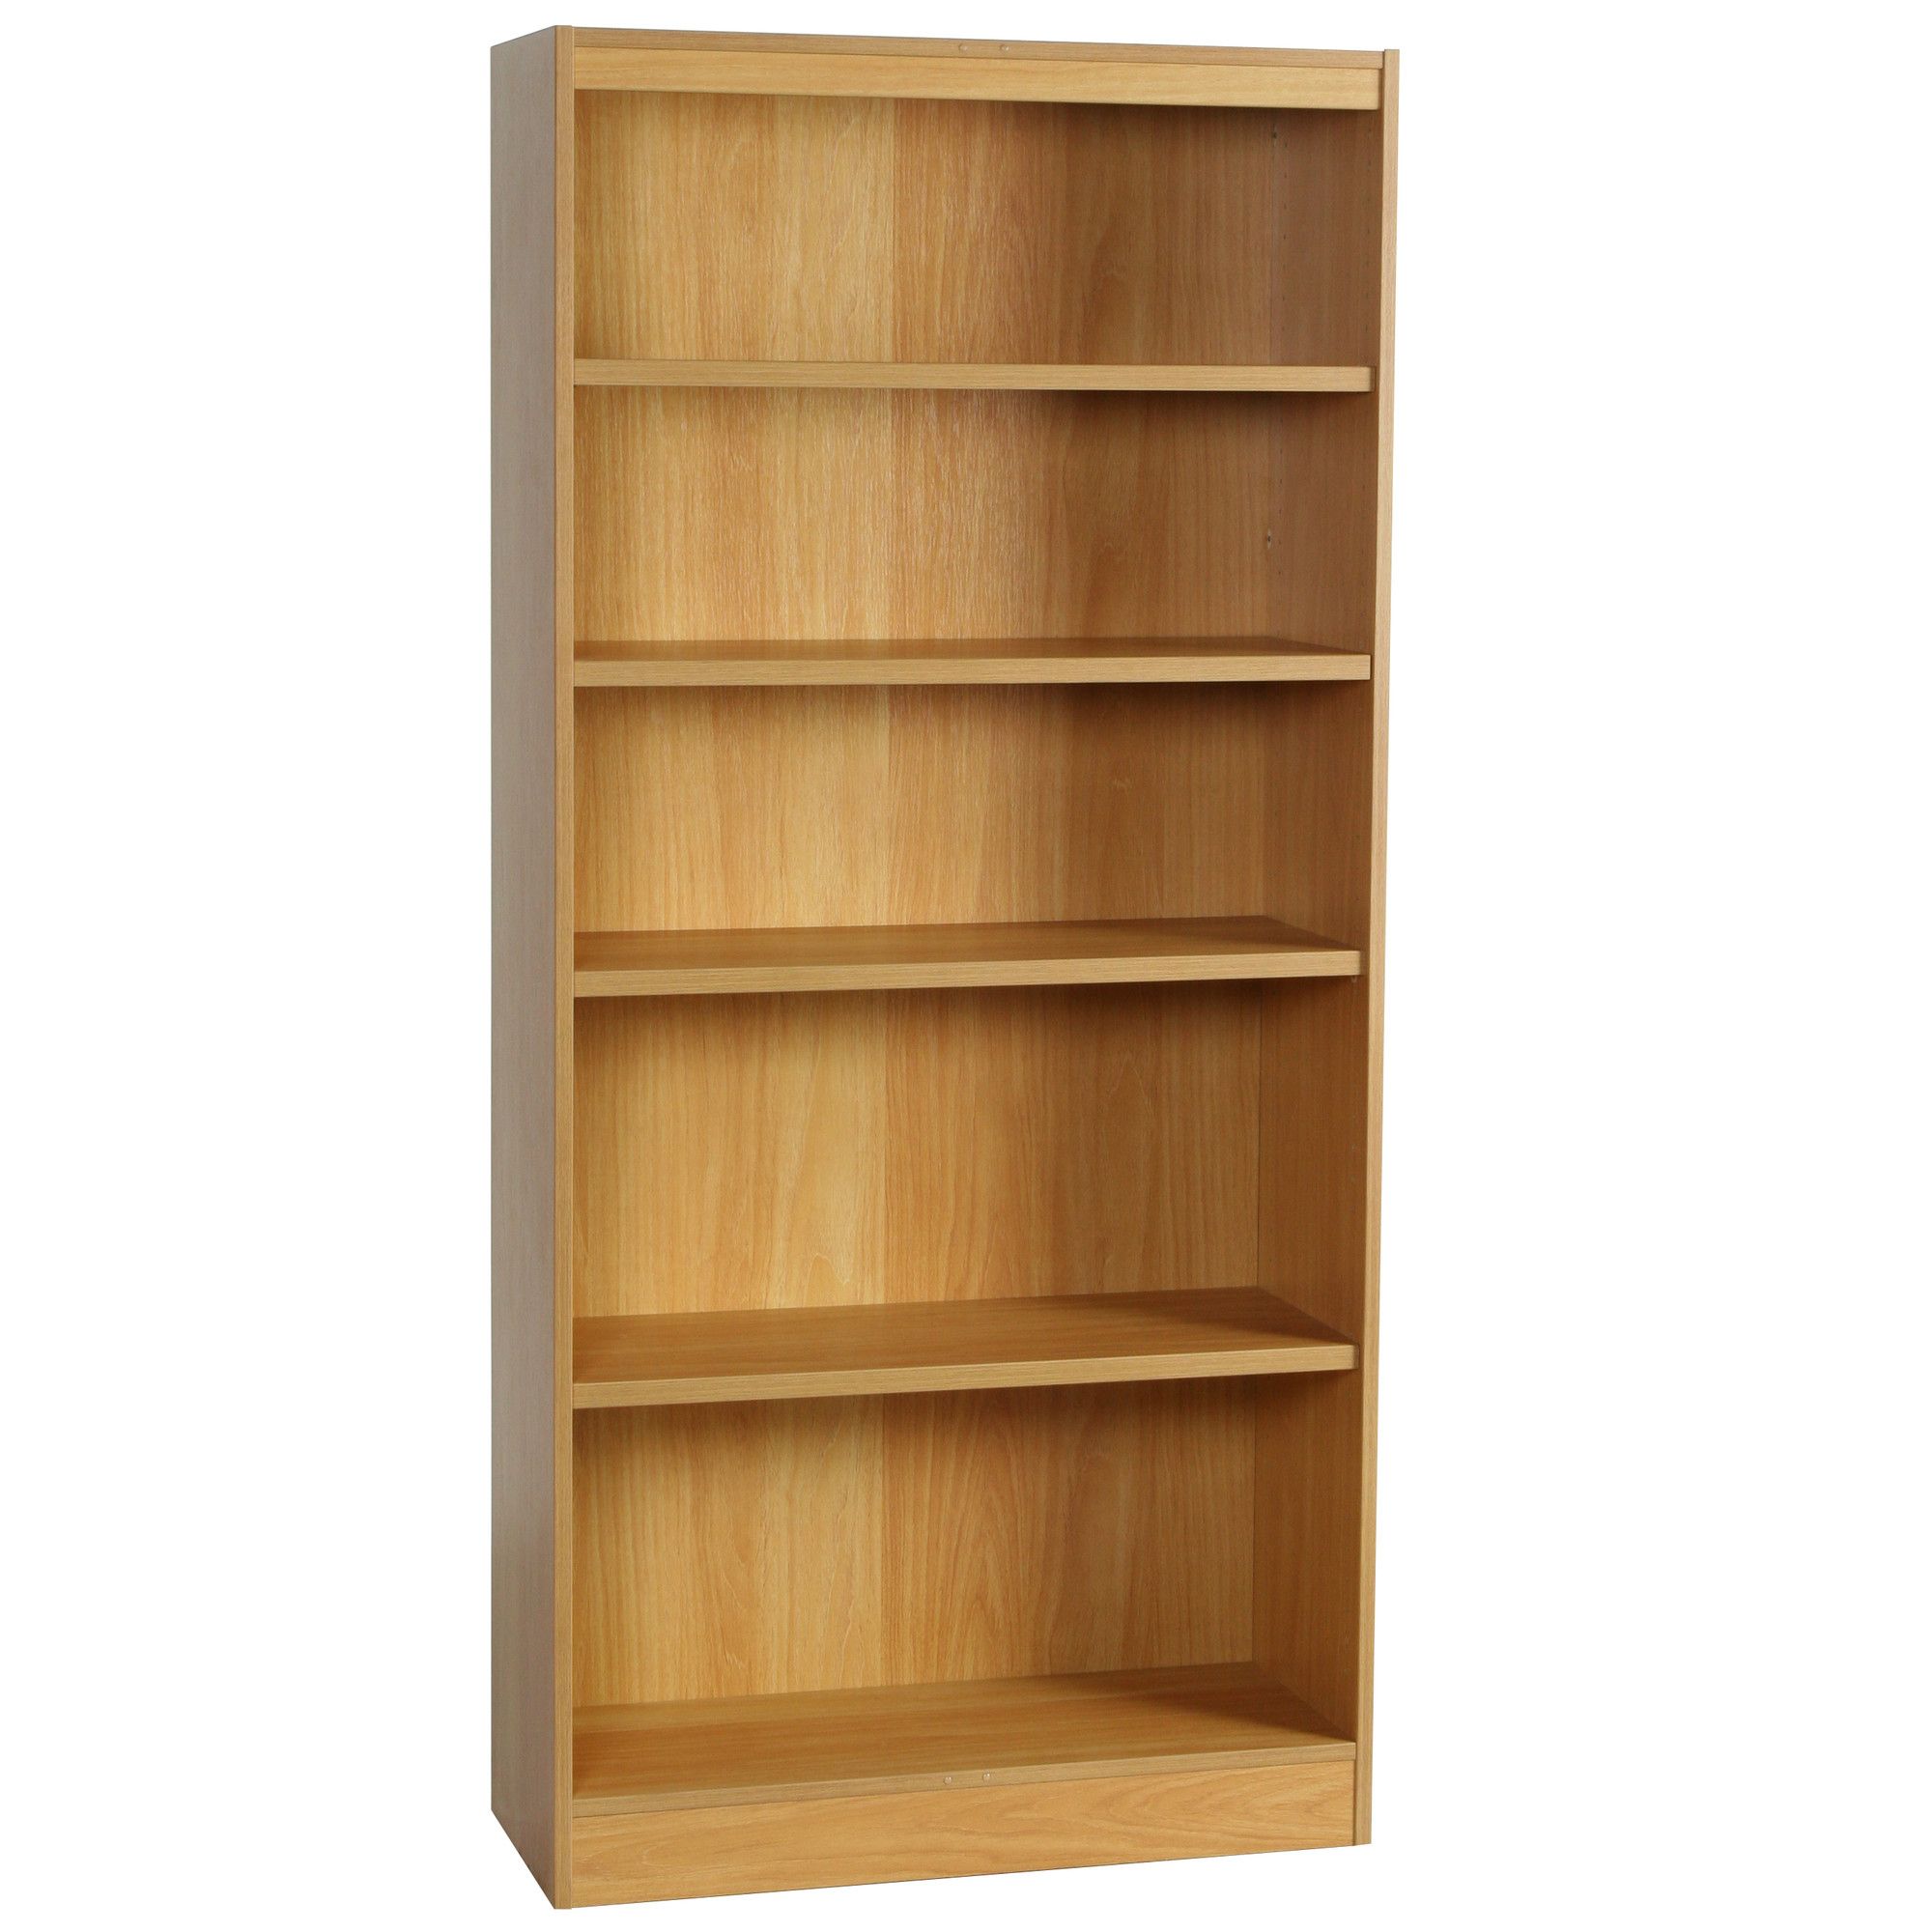 Enduro Five Shelf Tall Narrow Bookcase - Teak at Tesco Direct